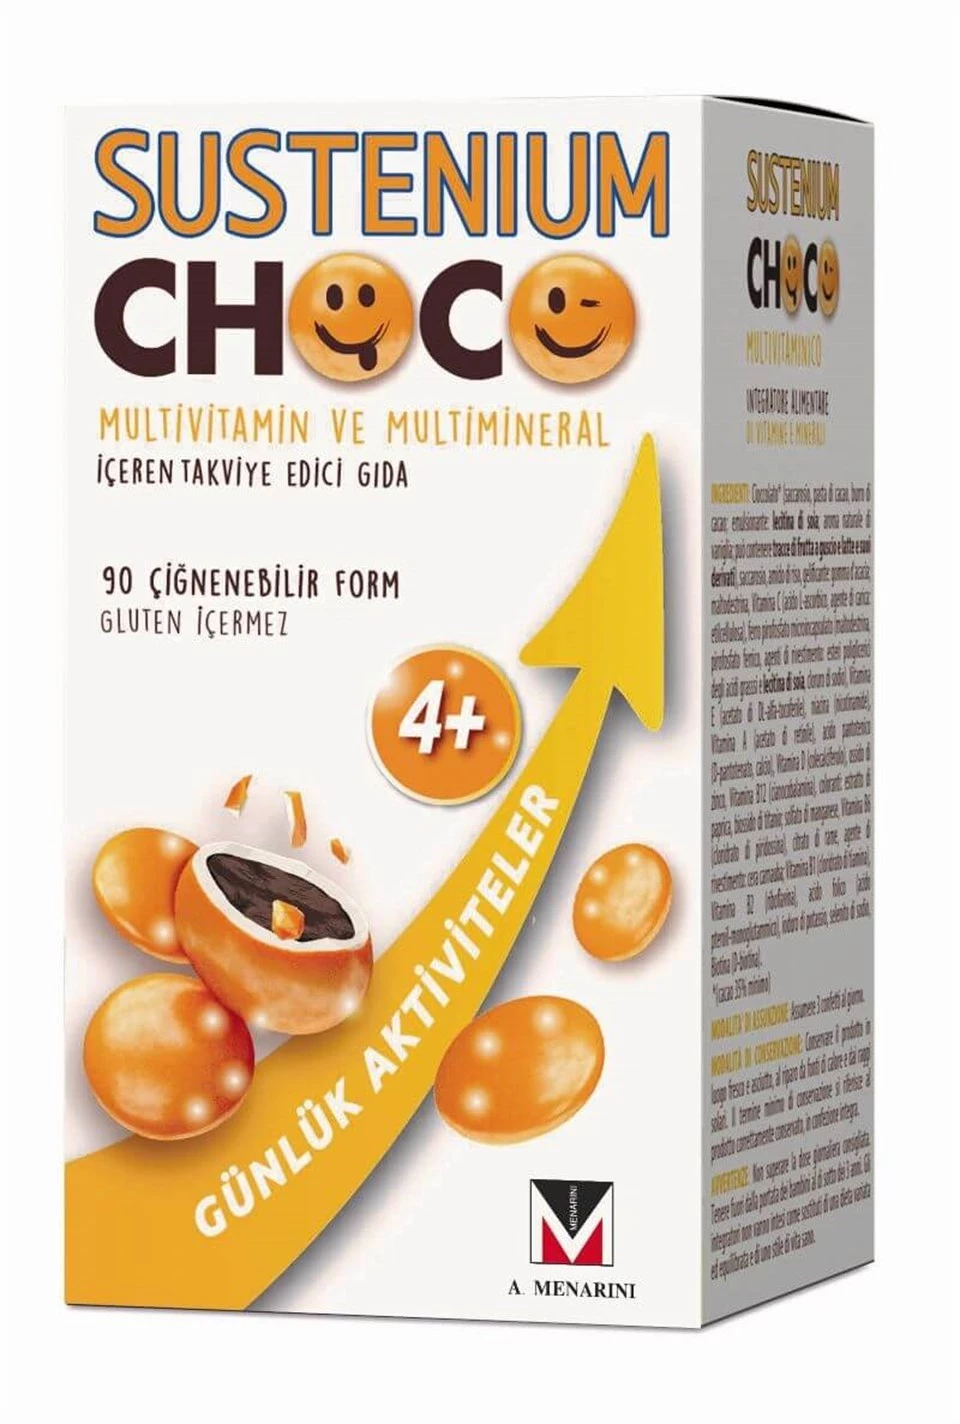 Sustenium Choco Multivitamin ve Multimineral içerikli 90 Çiğneme Tableti